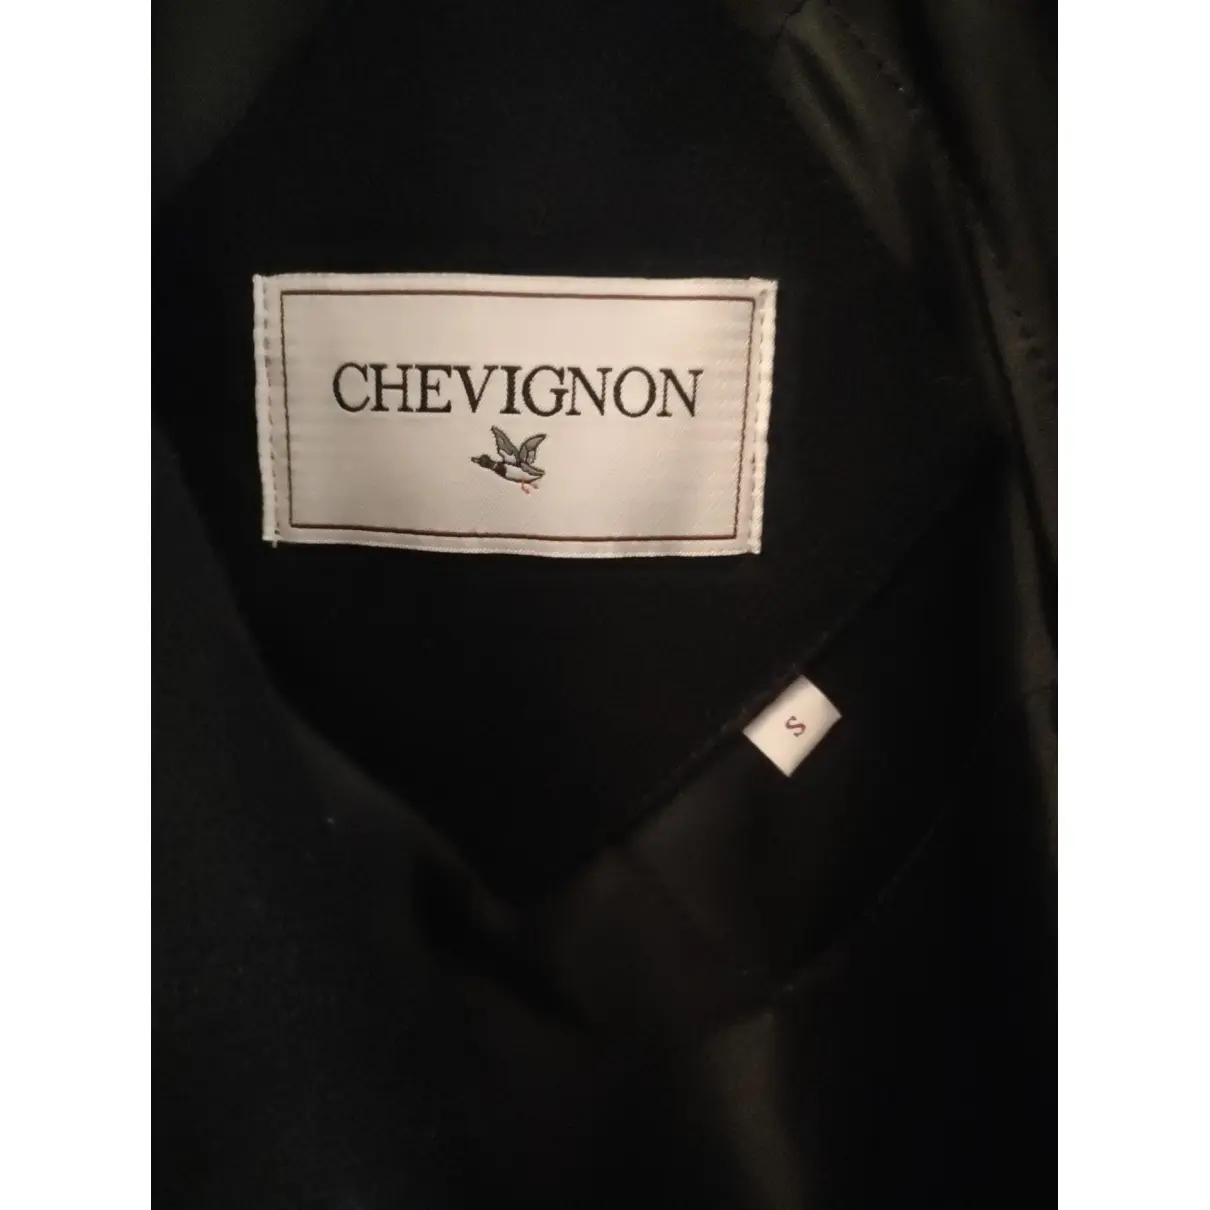 Buy Chevignon Wool peacoat online